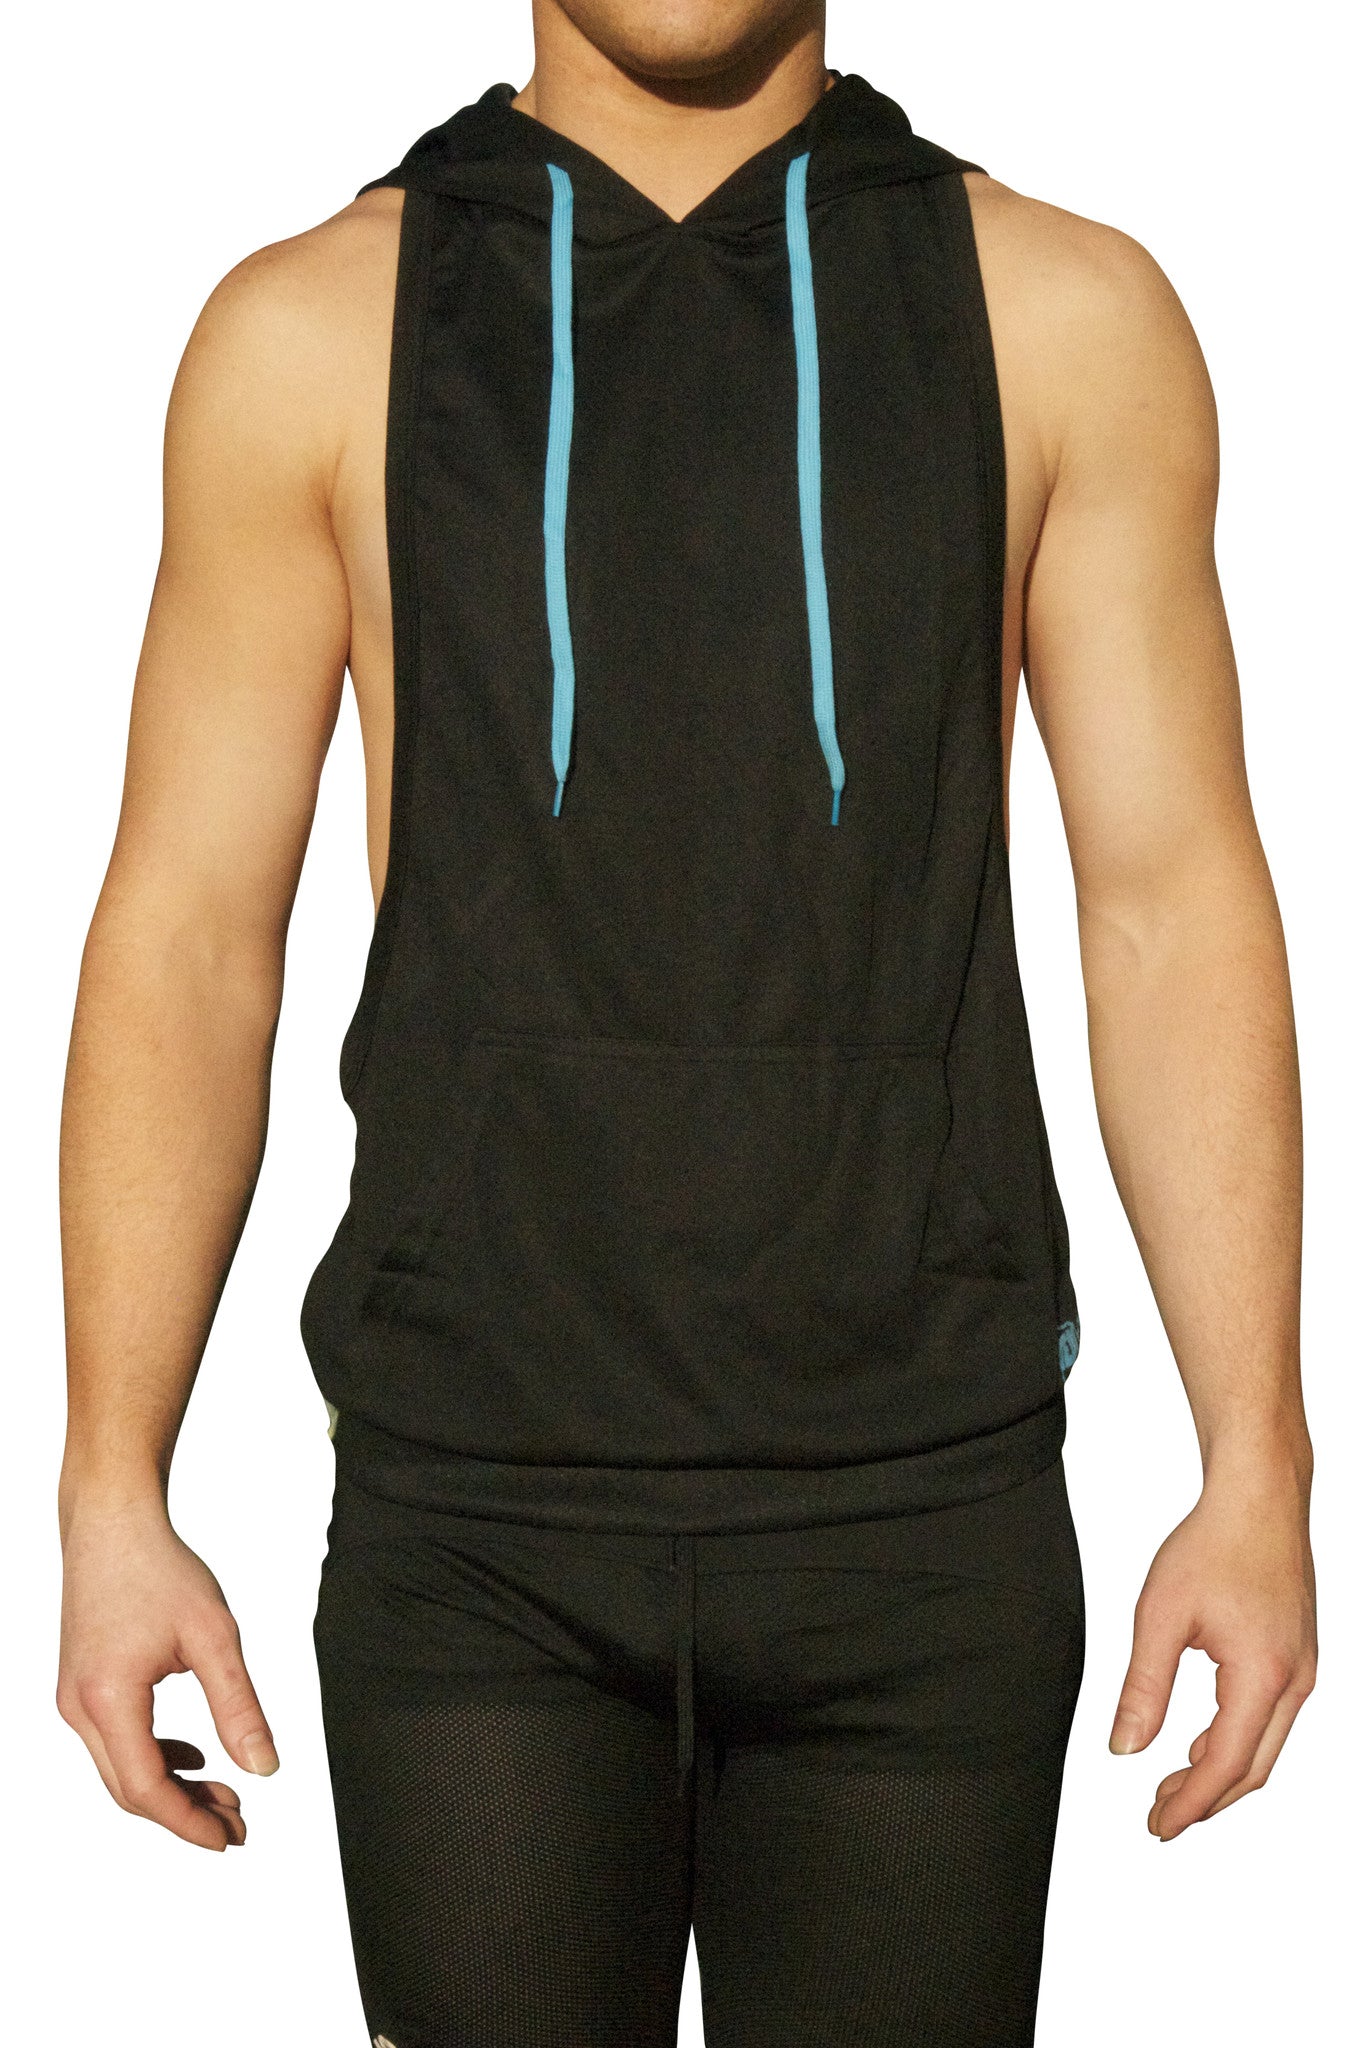 Neon Man Sleeveless Sweatshirt - Ready-to-Wear 1A972H